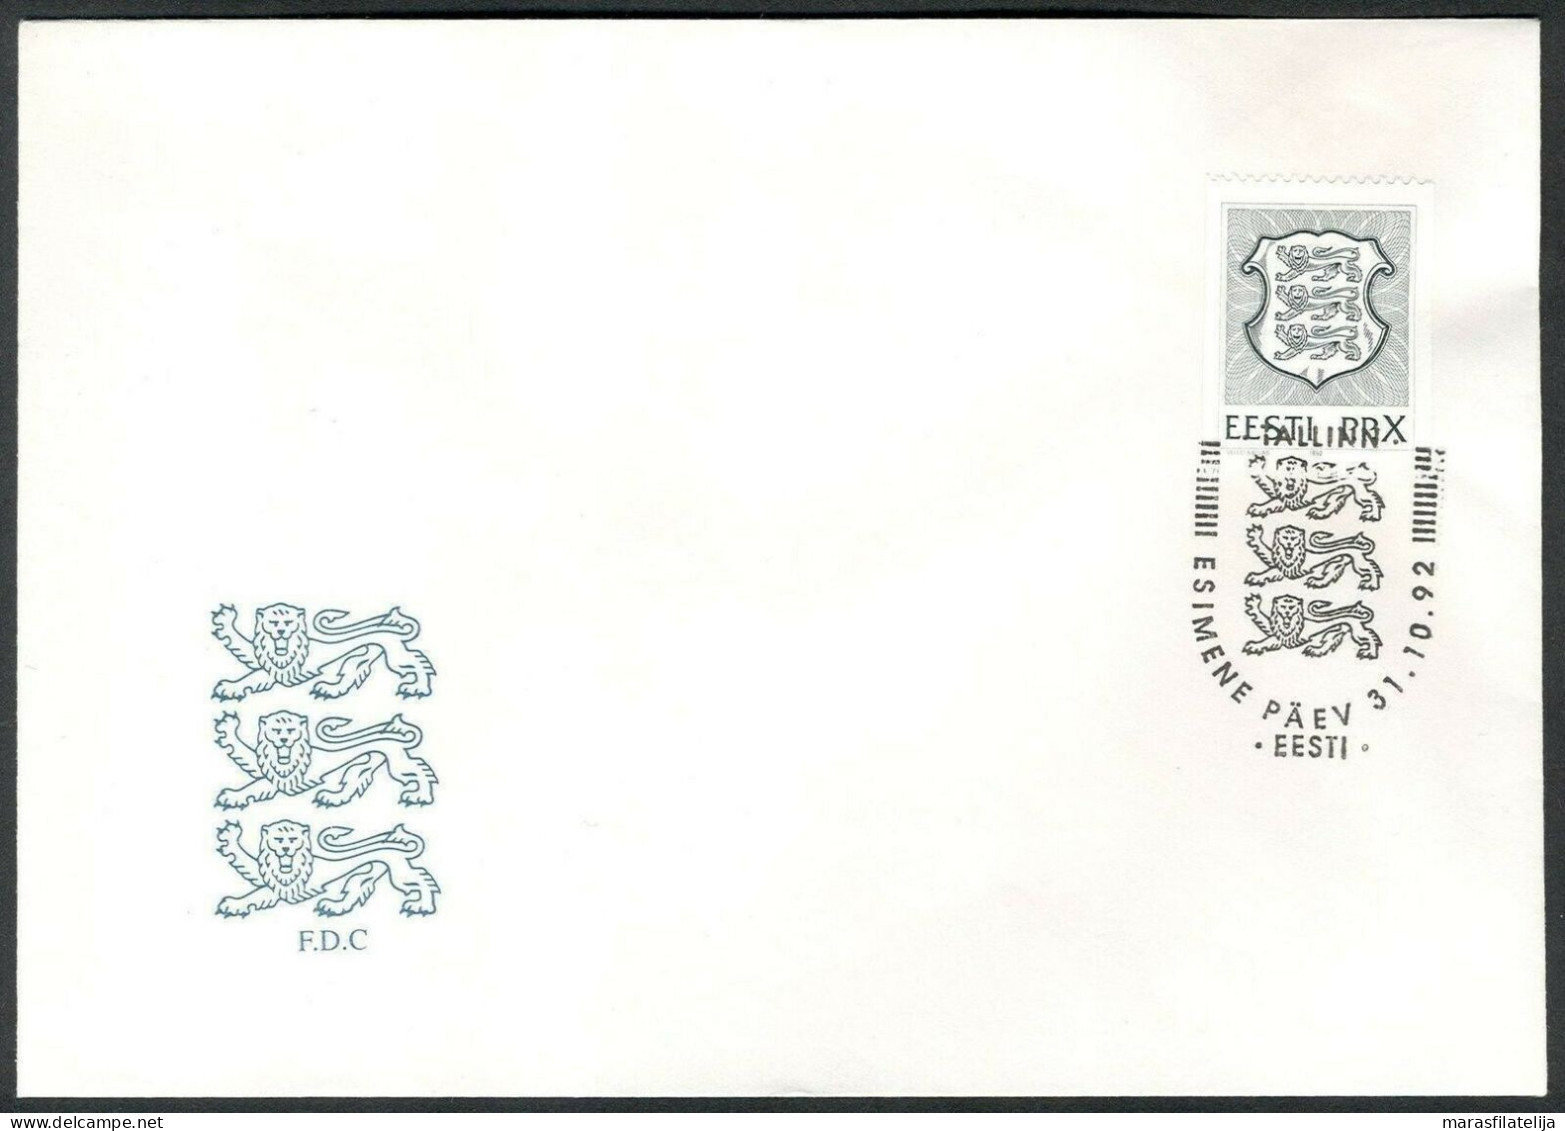 Estonia 1992, State Coat Of Arms, X Stamp (October), FDC - Estland